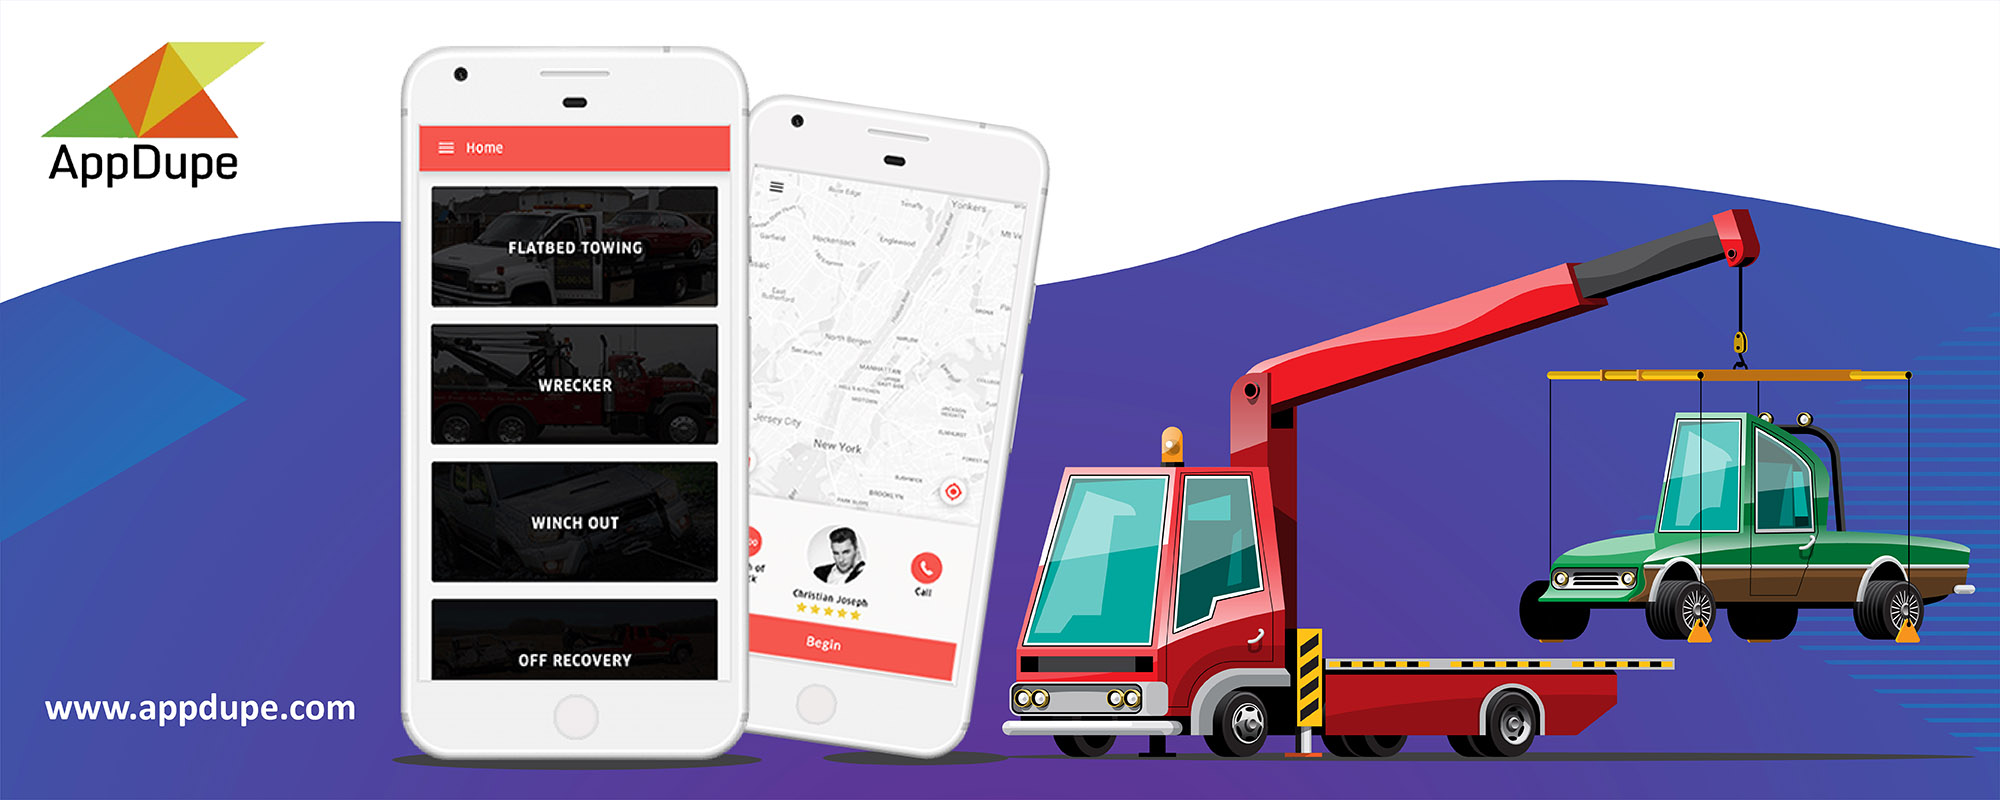 On-demand roadside assistance app